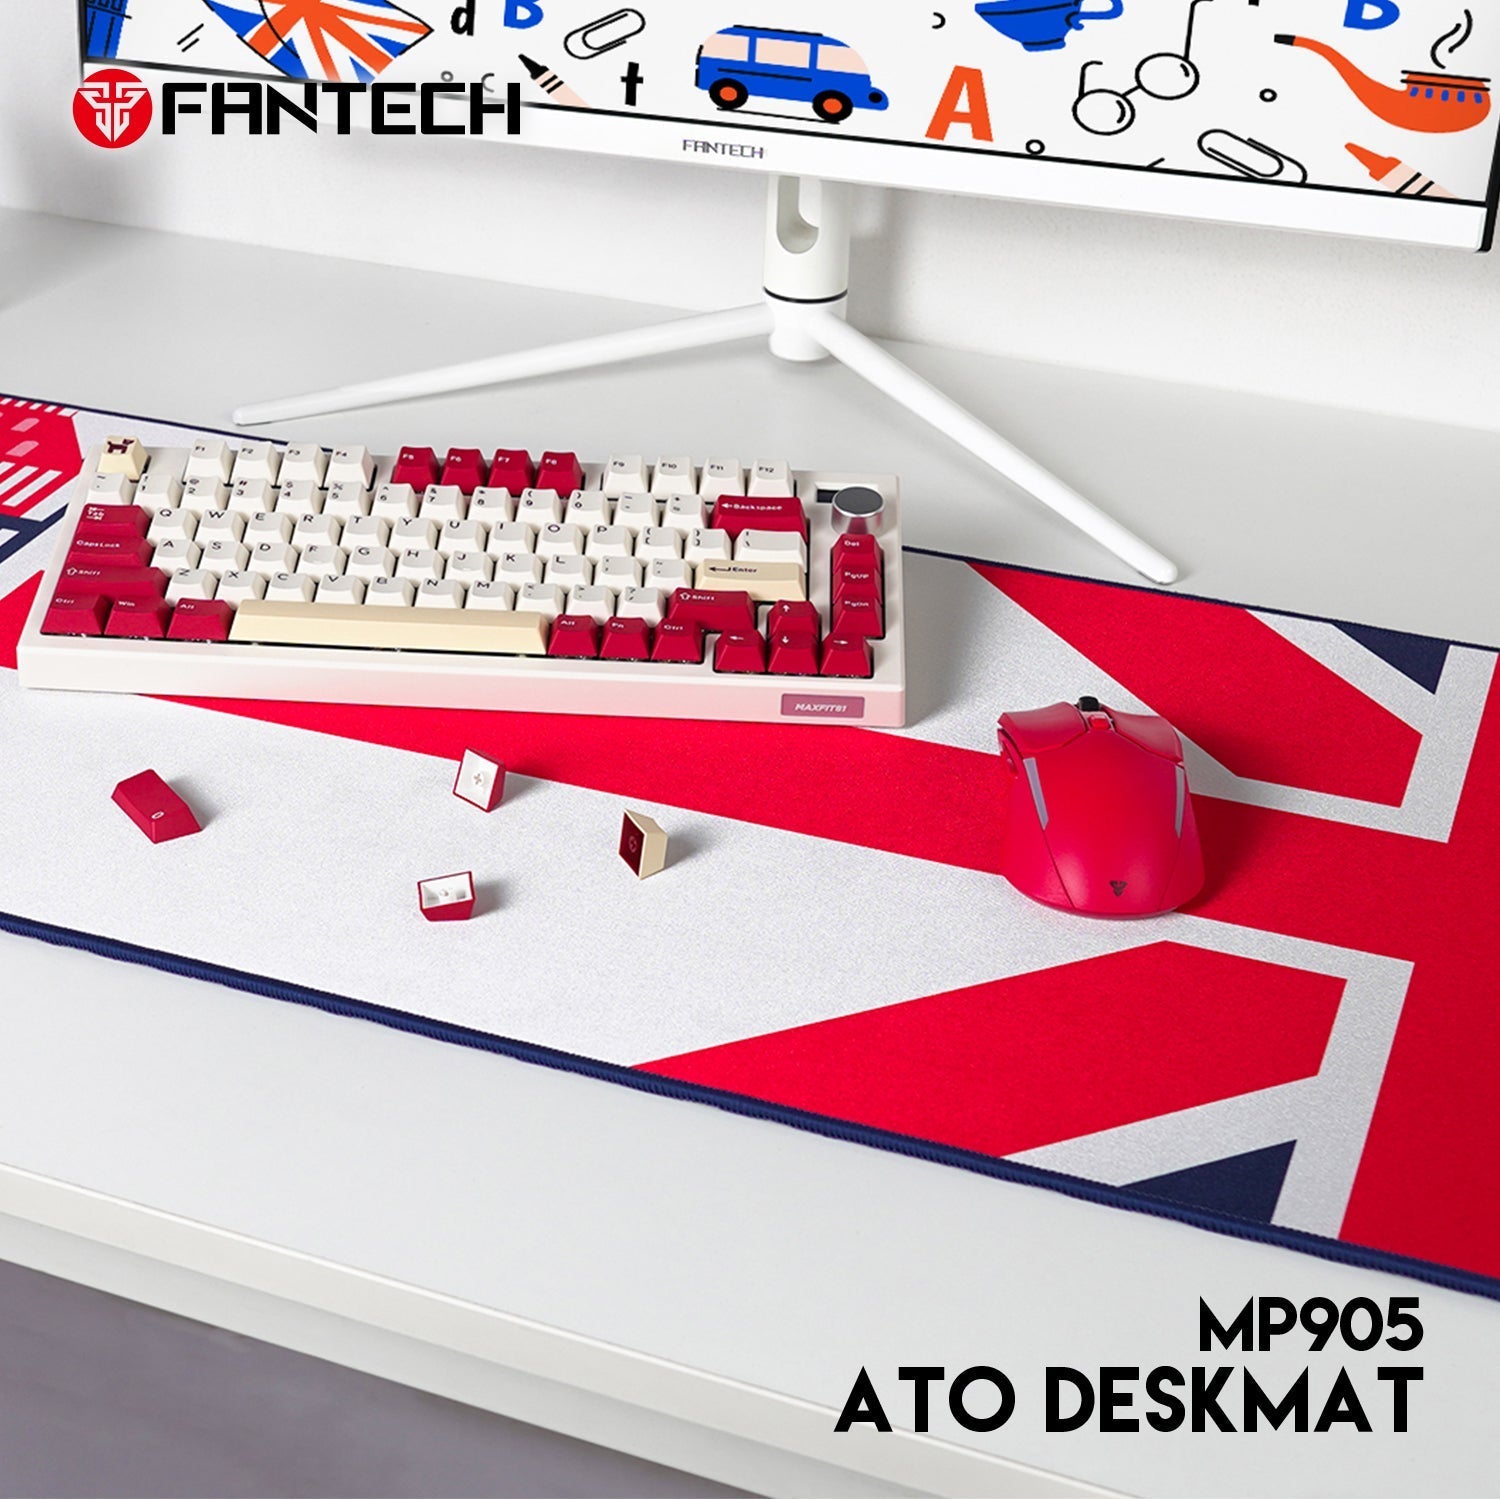 Fantech ATO MP905 Desk Mat VIBE EDTION London Tour JOD 15